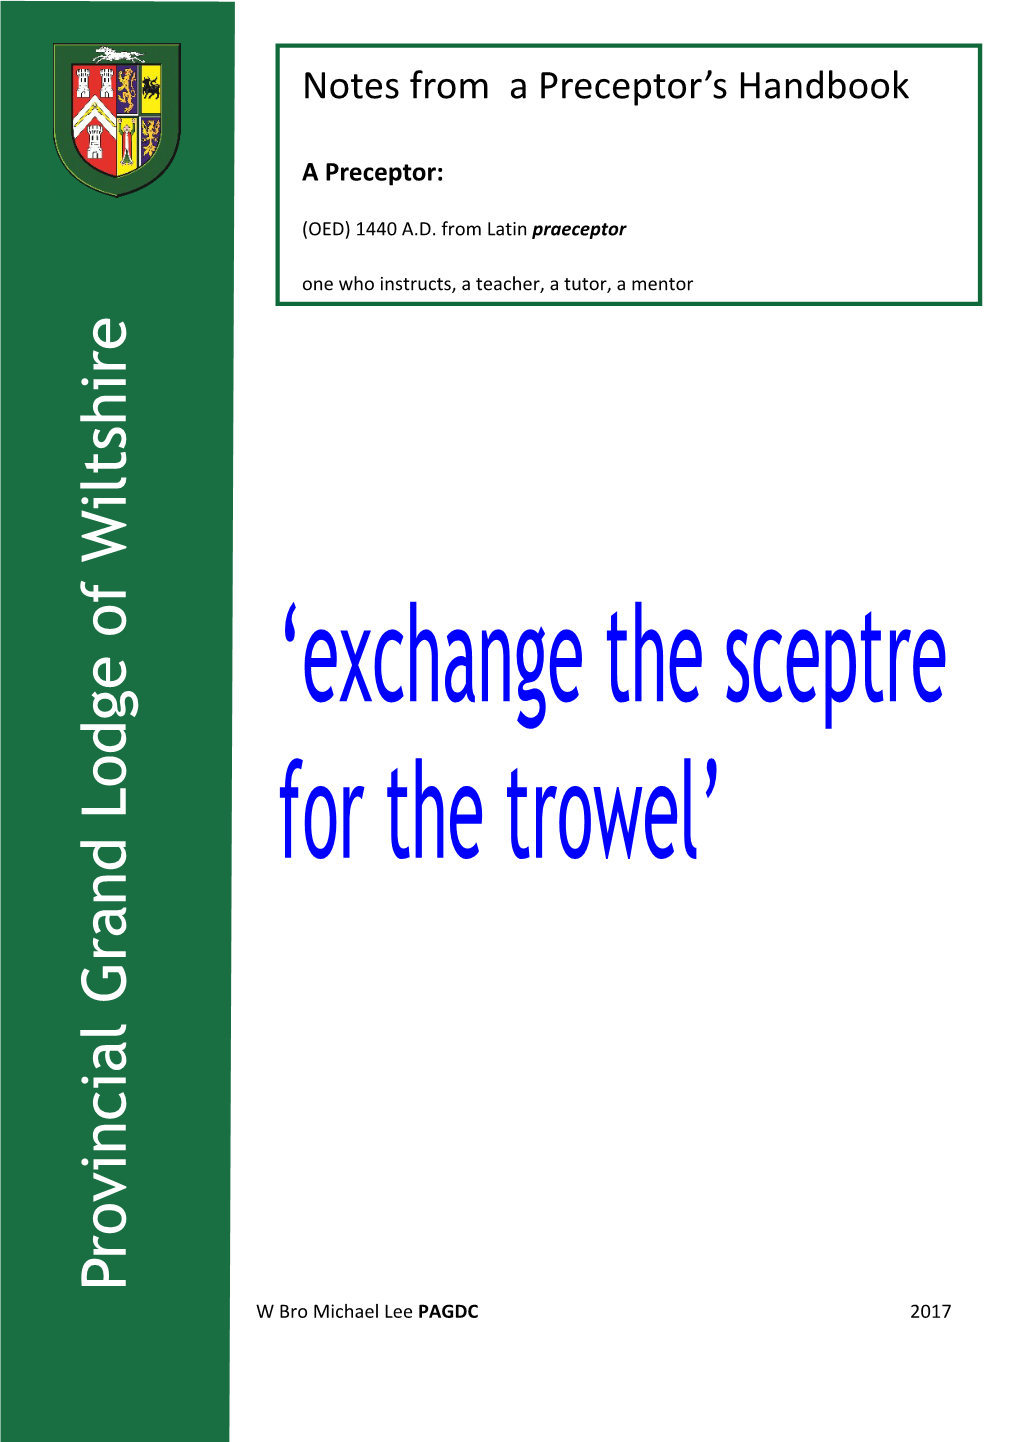 Preceptor's Handbook 'The Sceptre for the Trowell'